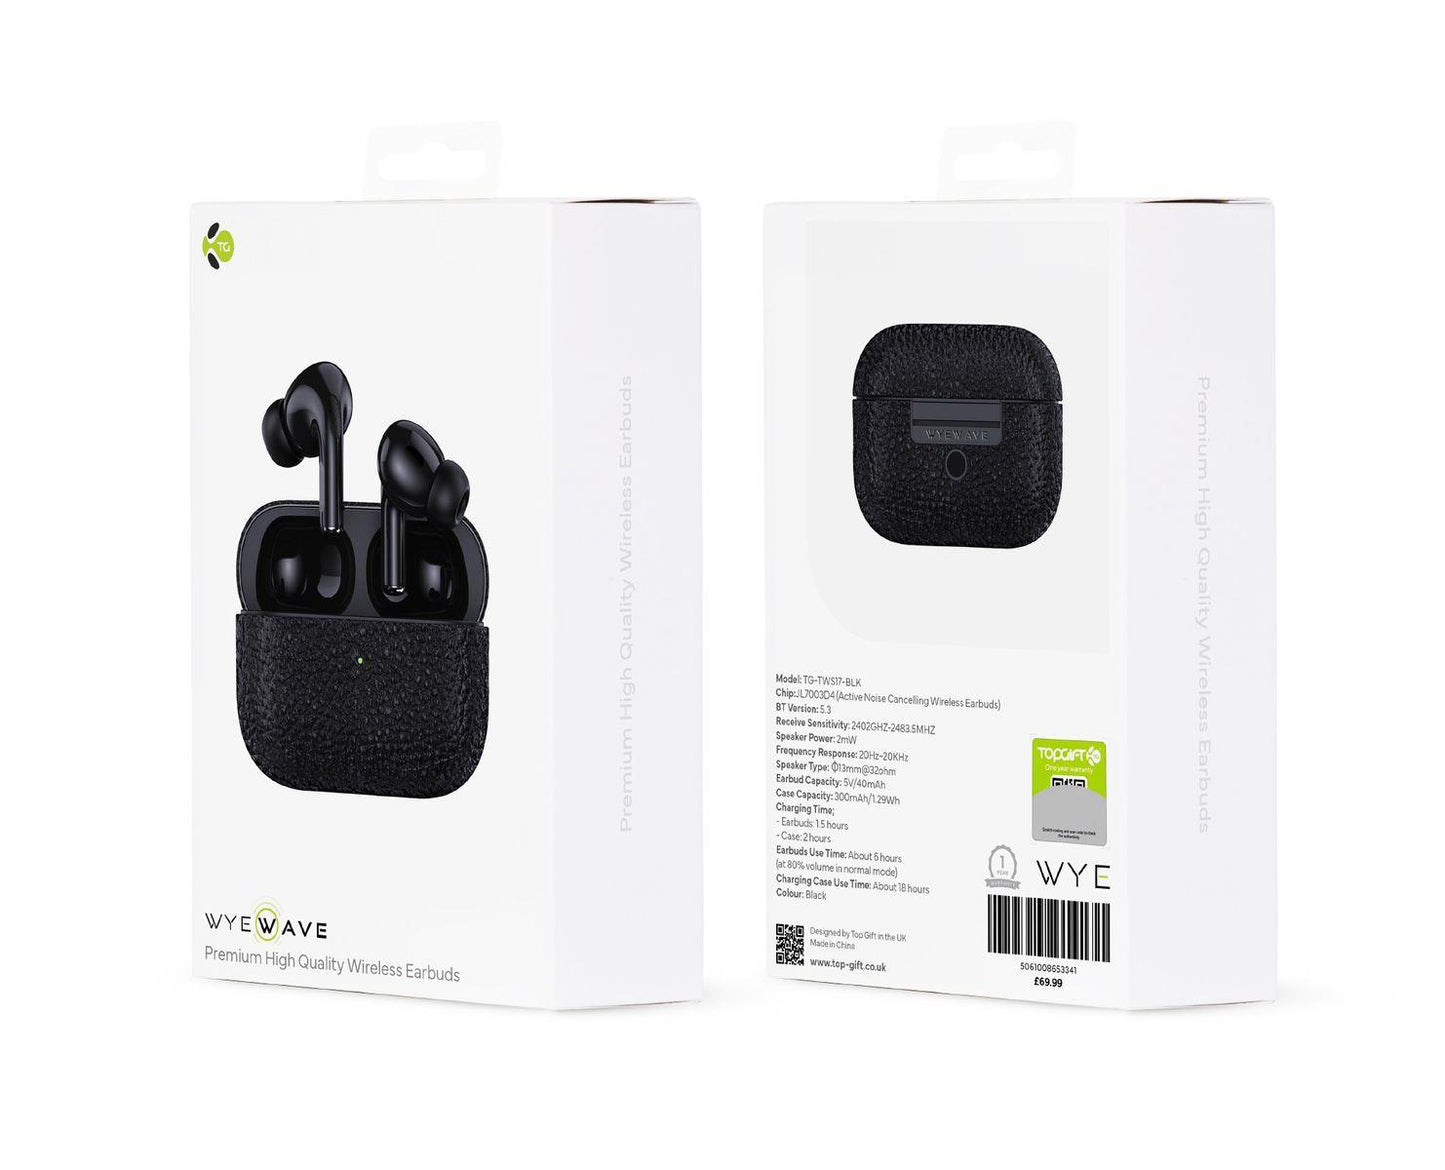 WYEWAVE Premium High Quality Wireless Earbuds With ANC